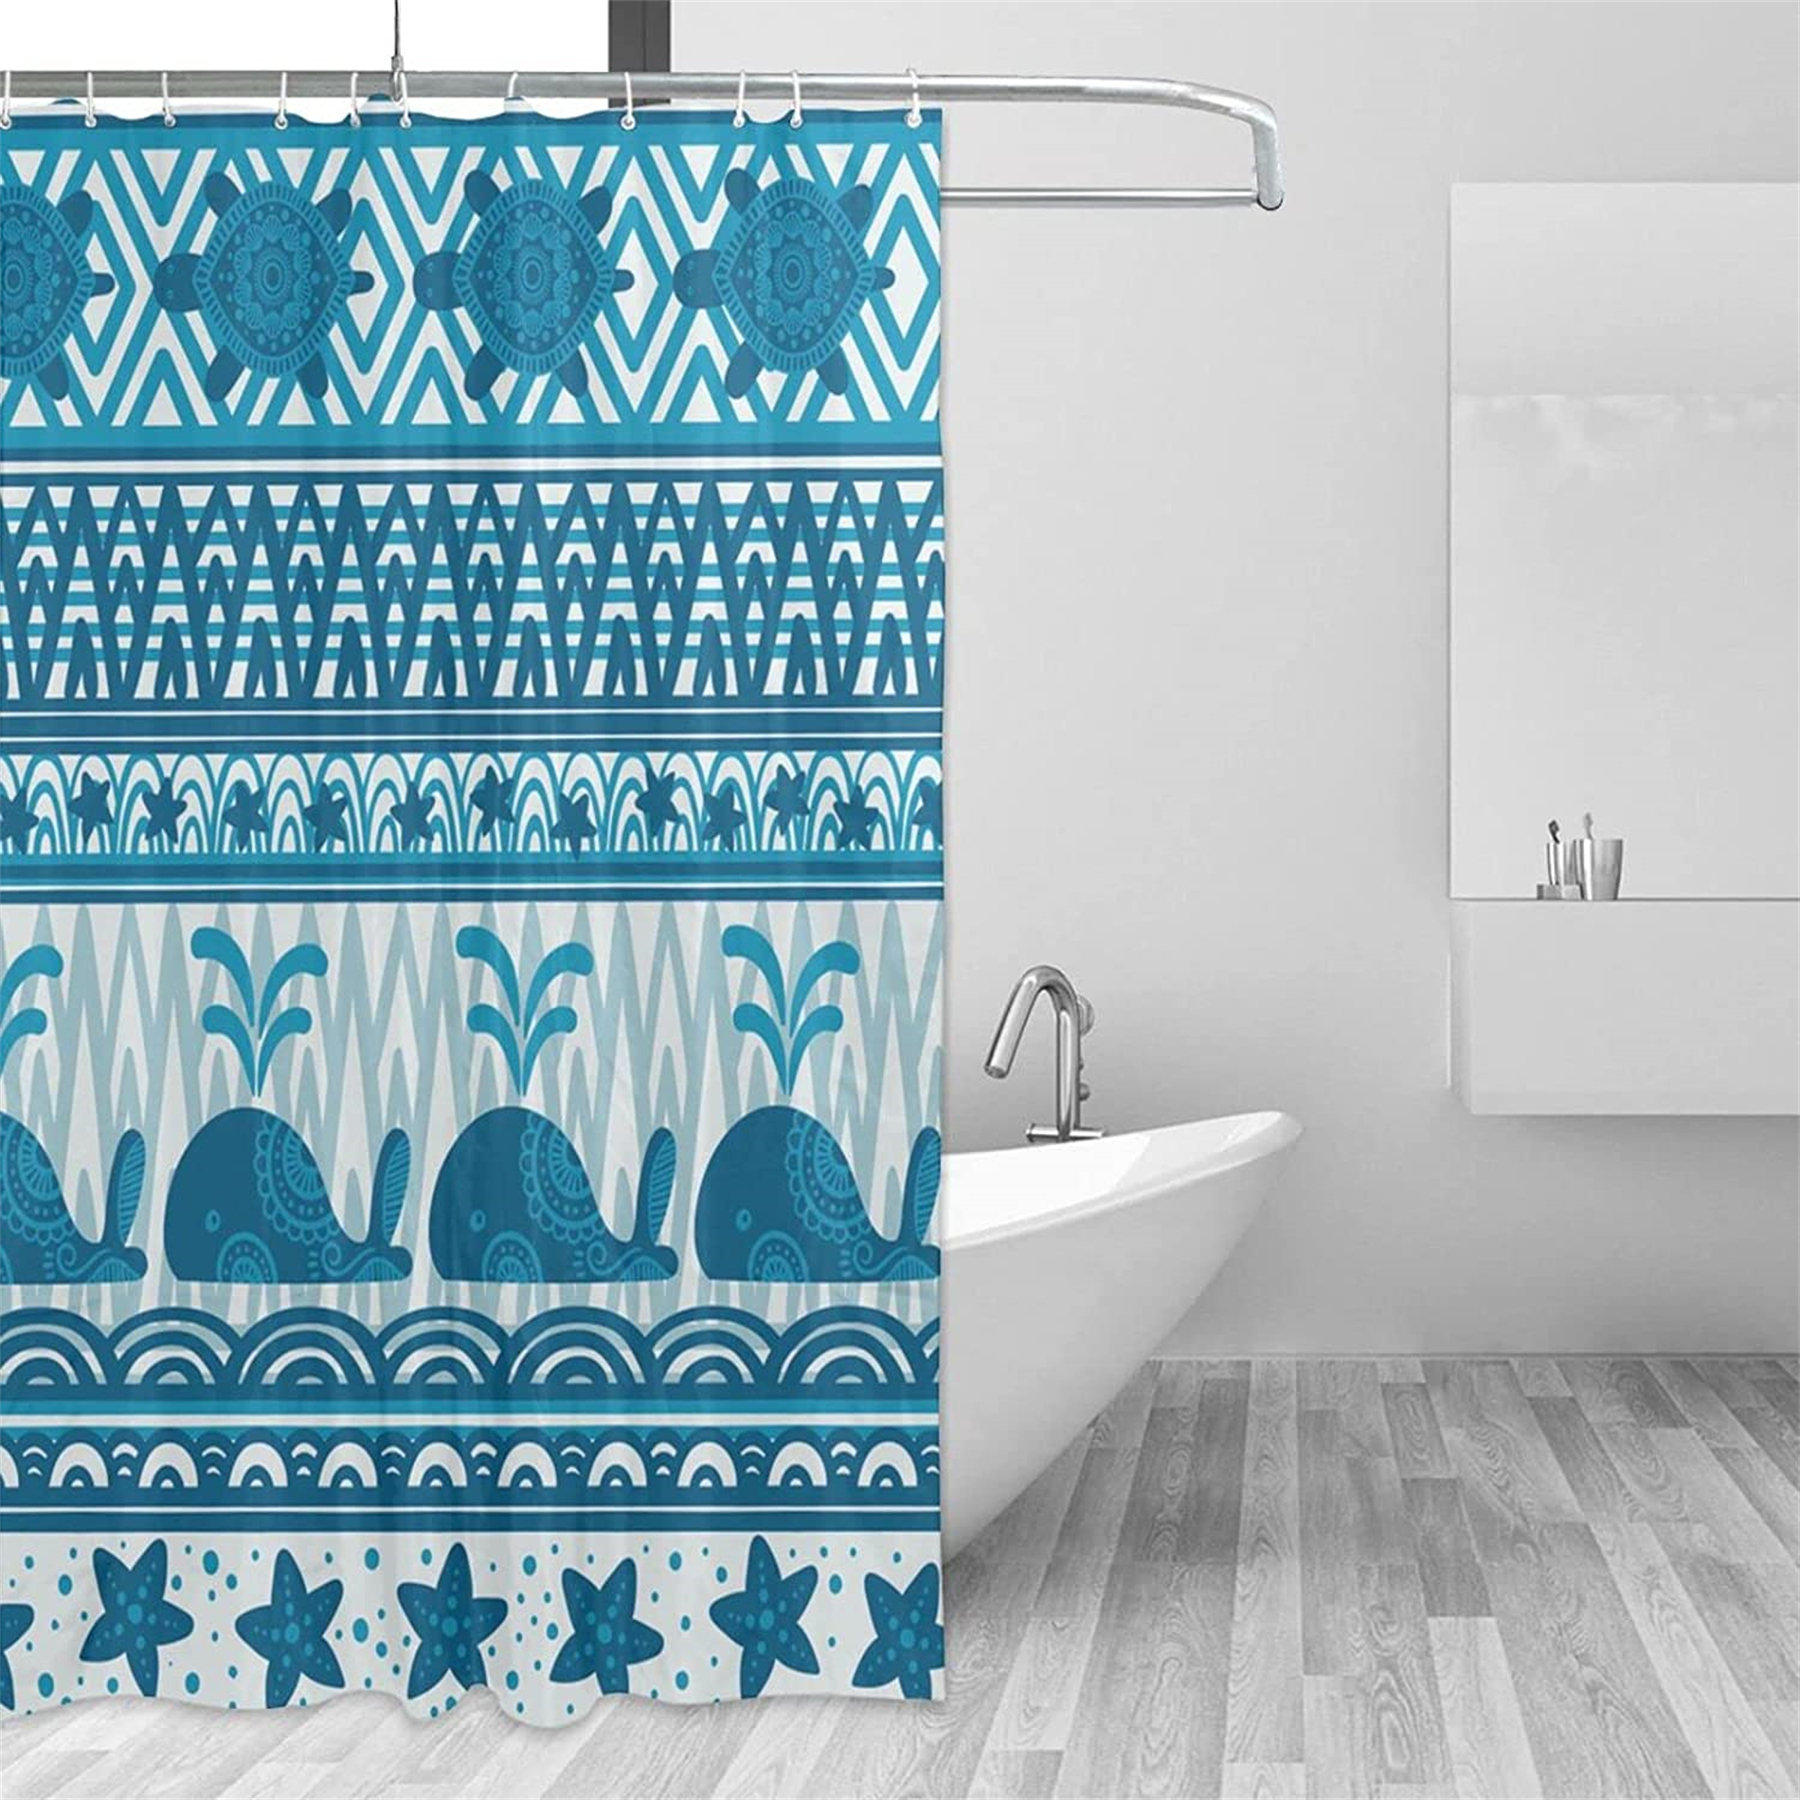 Bathroom Ocean Cartoon Shower Curtain Set Waterproof Polyester Fabric w/Hooks 